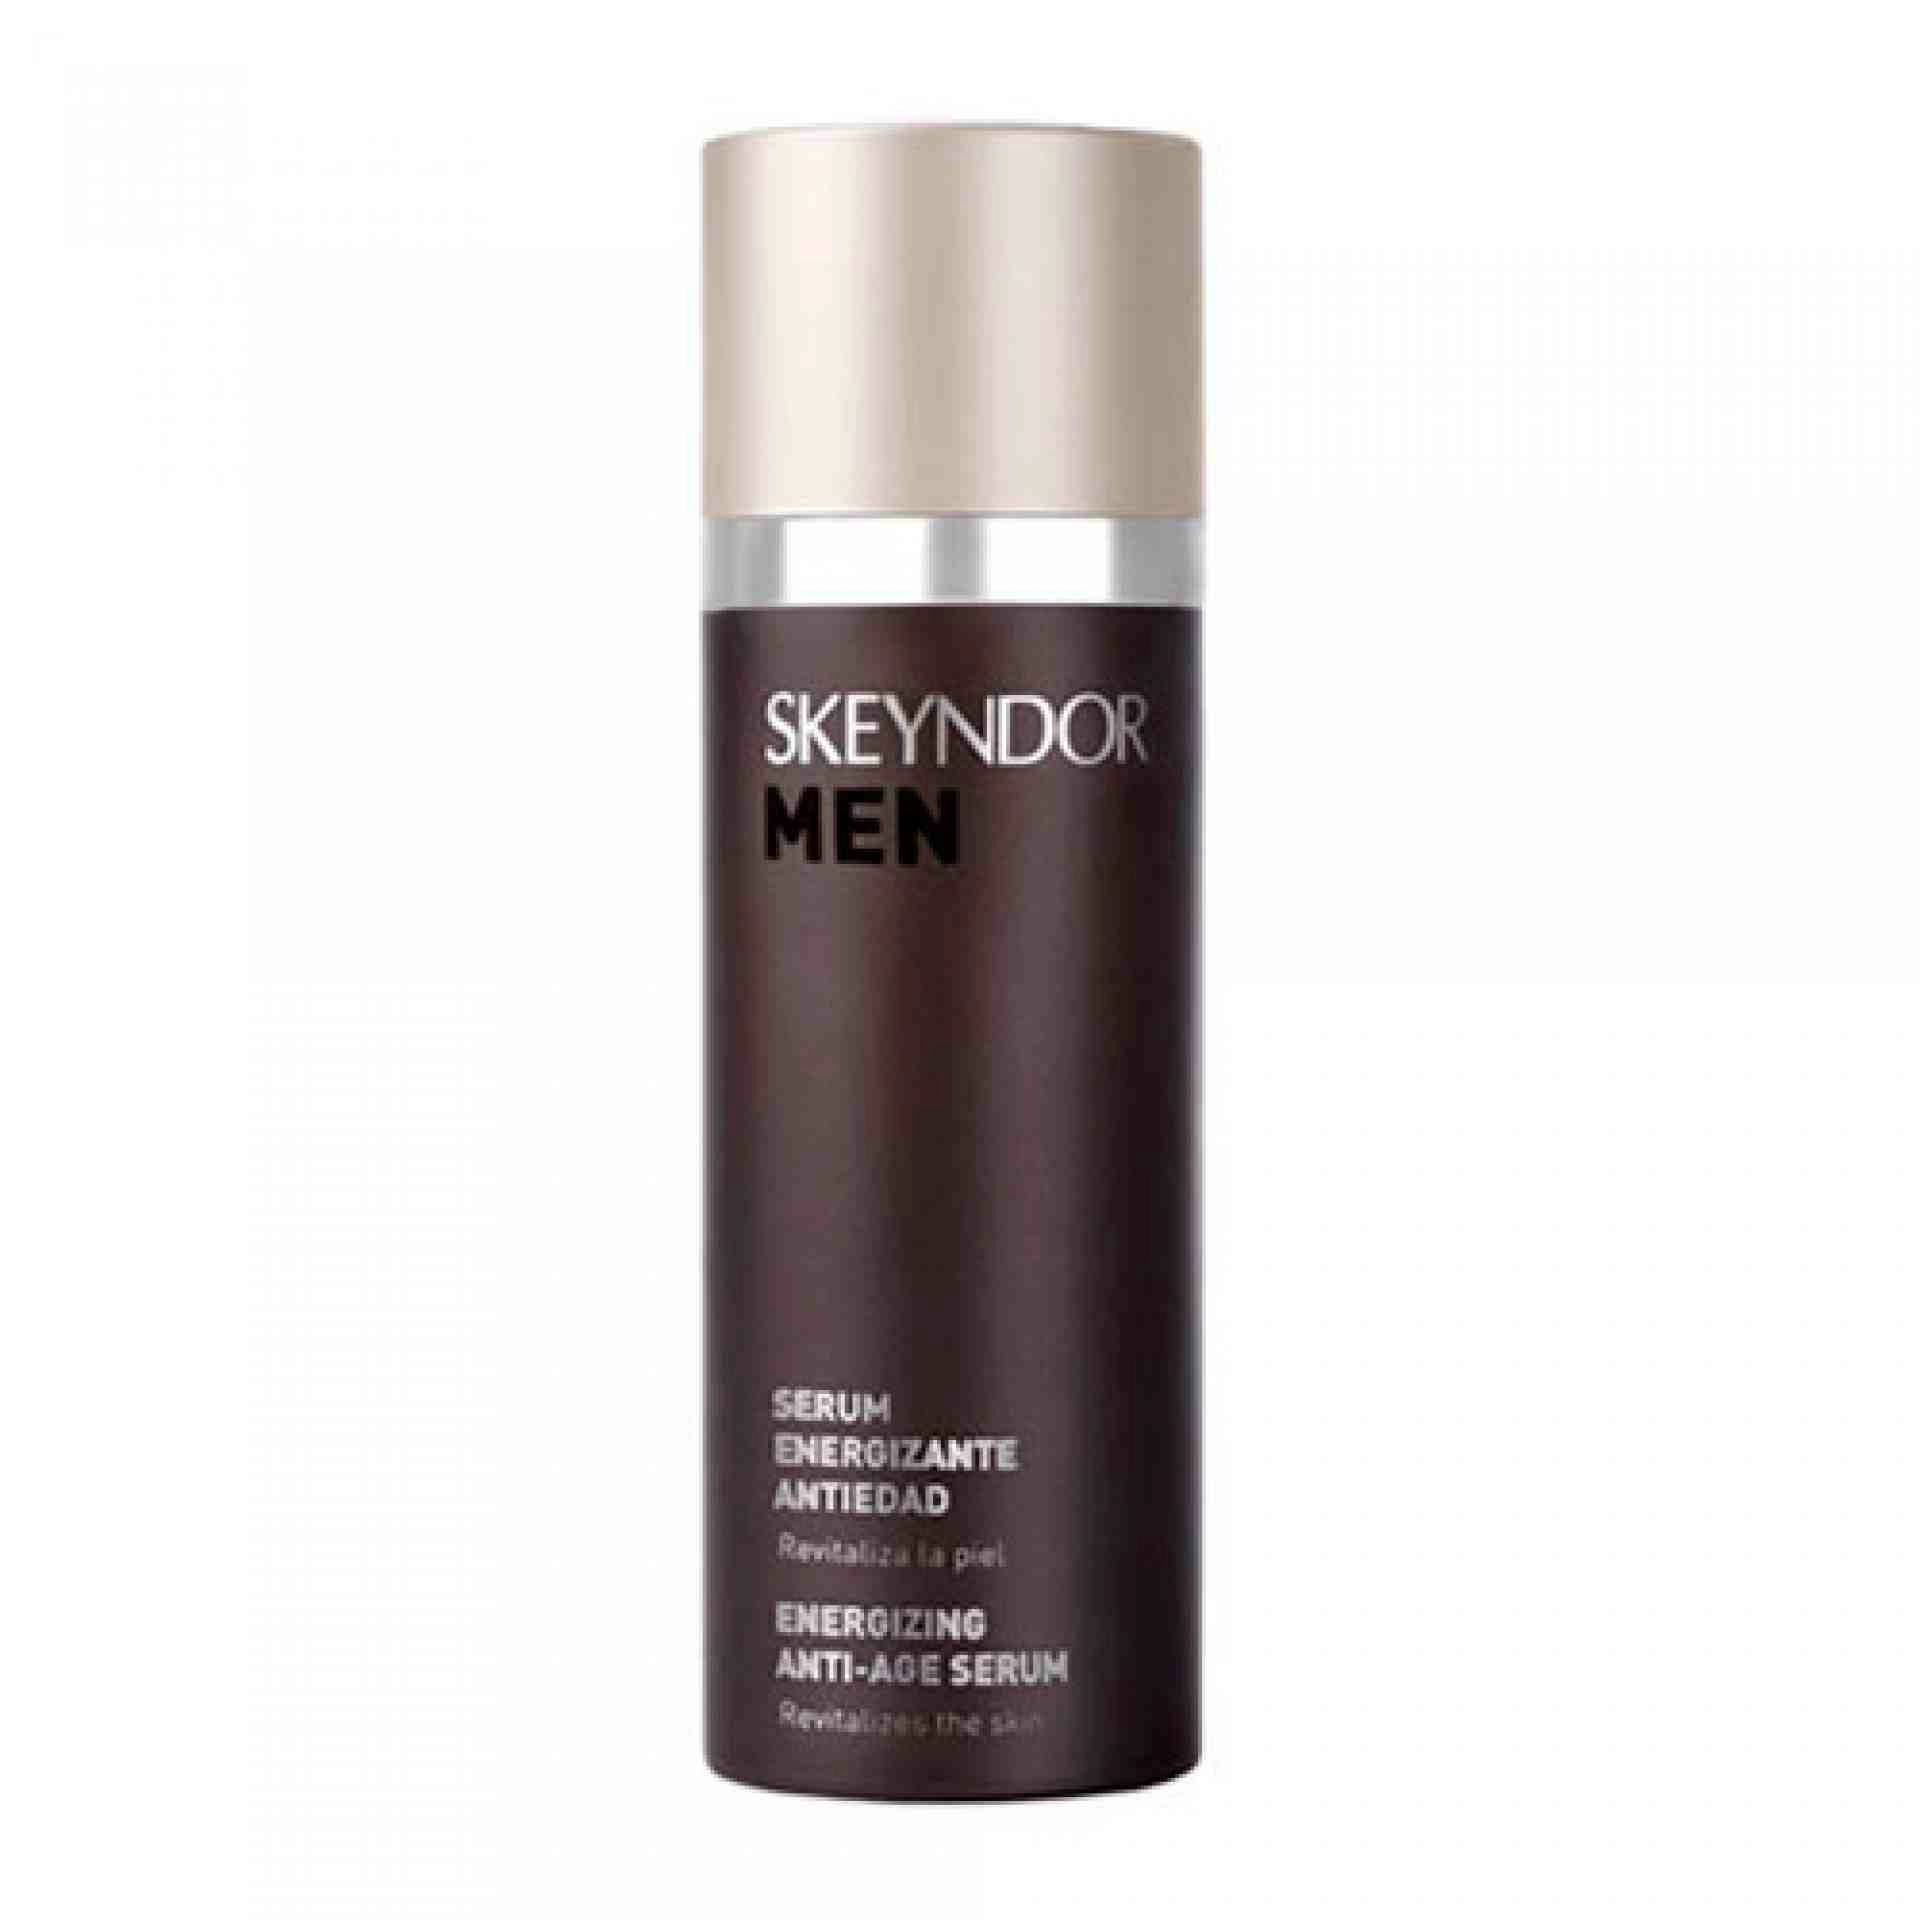 Serum Energizante Antiedad | Suero Revitalizante SPF10 30ml - Skeyndor Men - Skeyndor ®